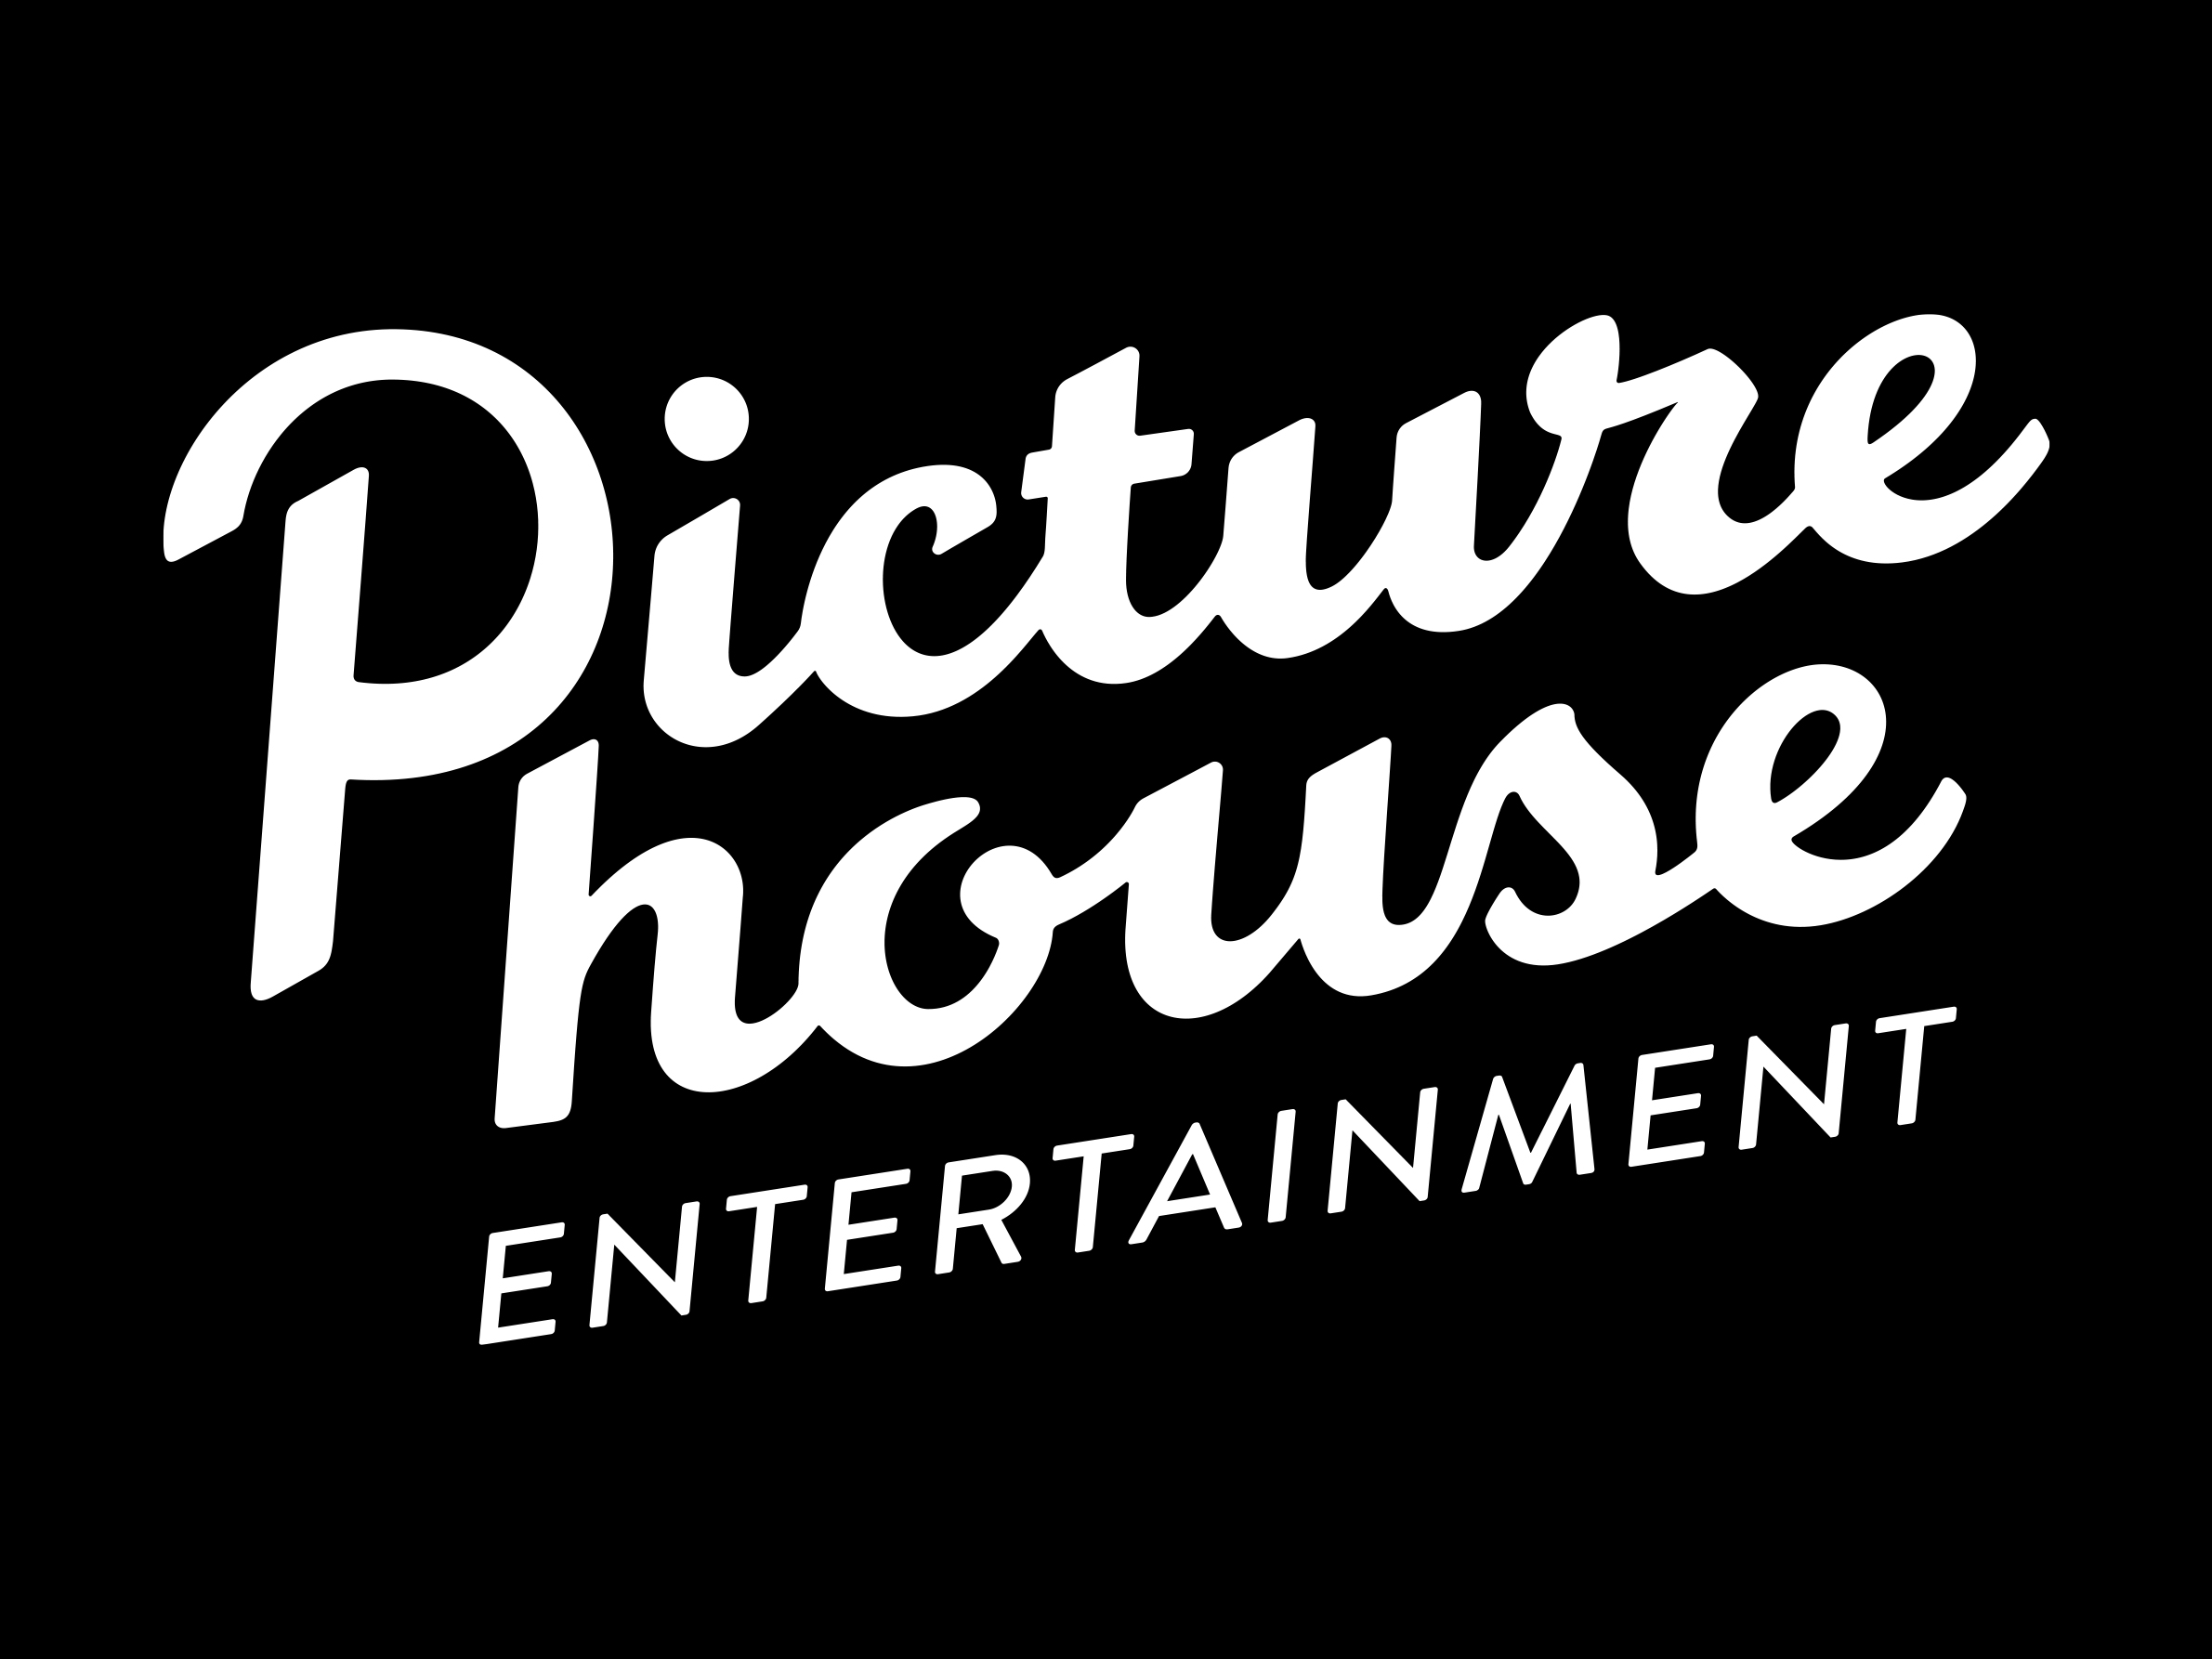 Picturehouse Entertainment